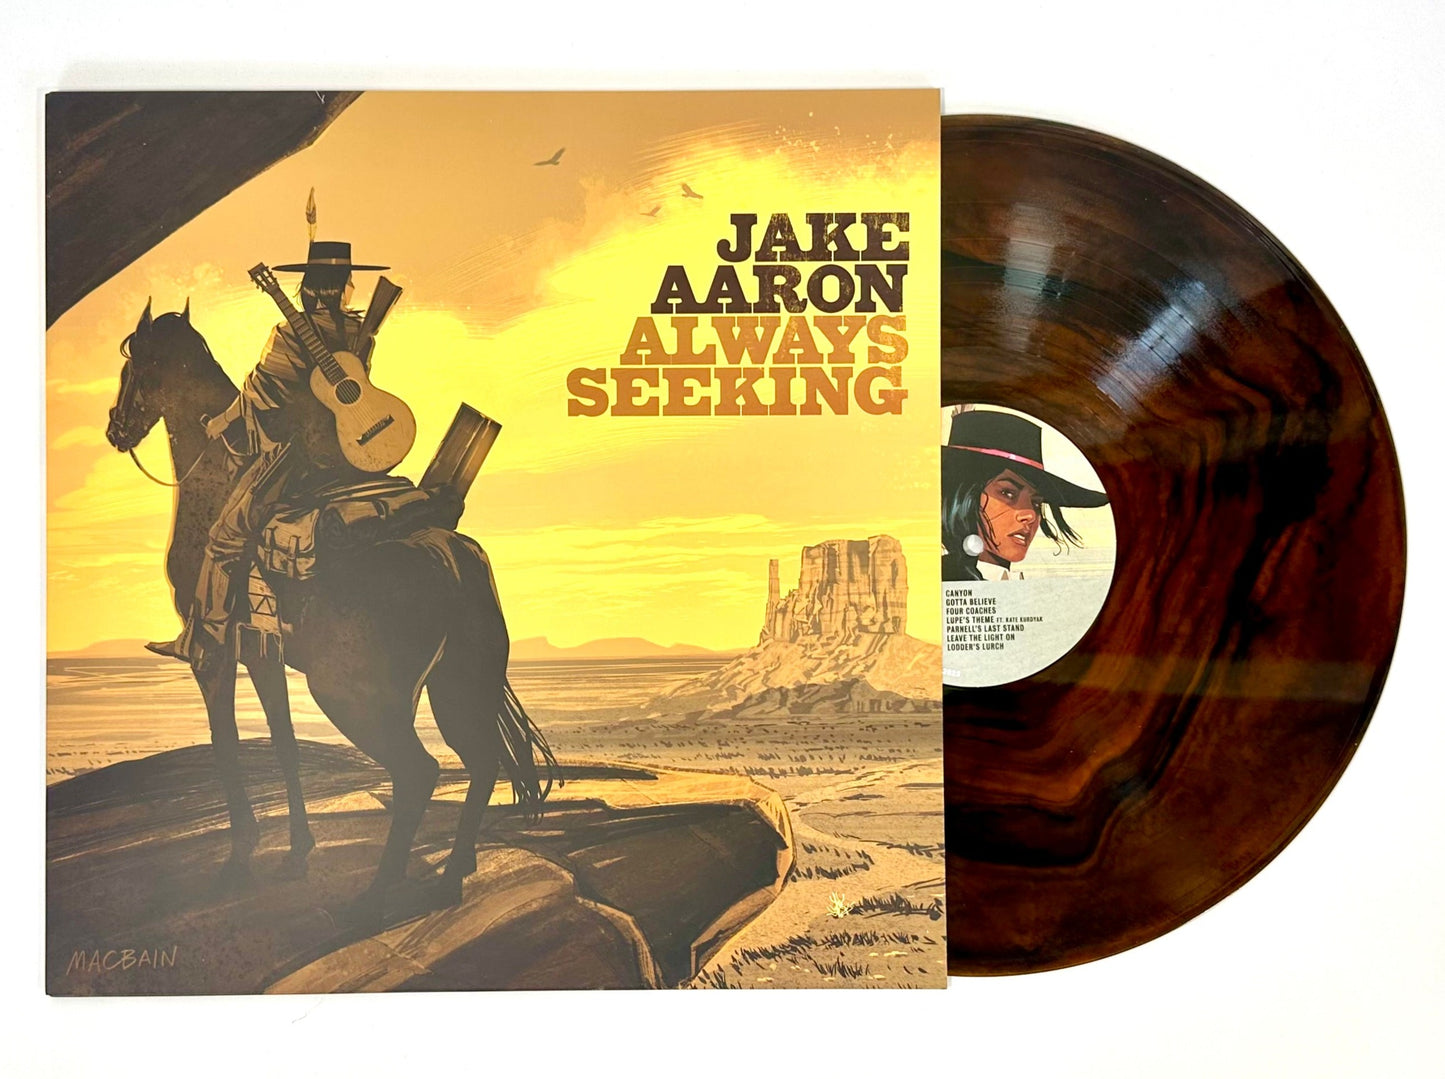 Jake Aaron – Always Seeking